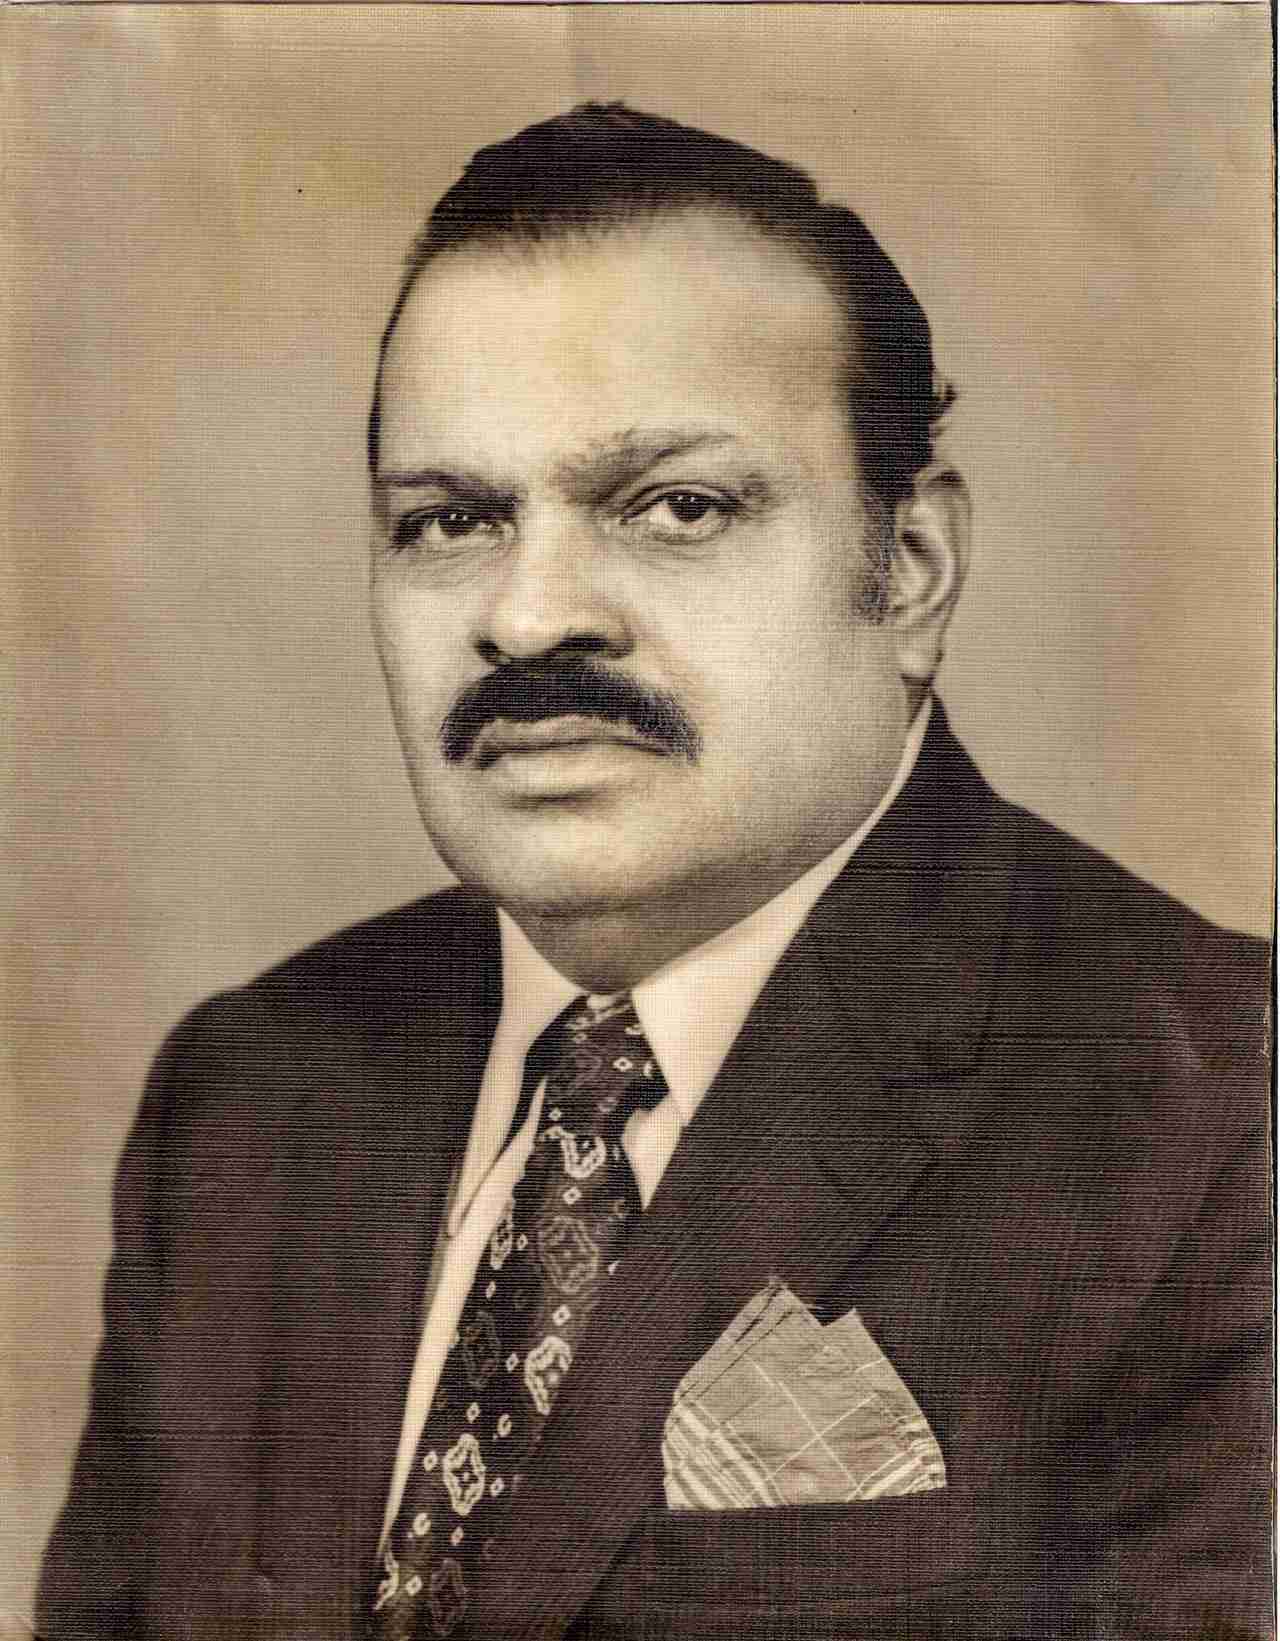 H. L. Nage Gowda - Founder of Janapada Loka